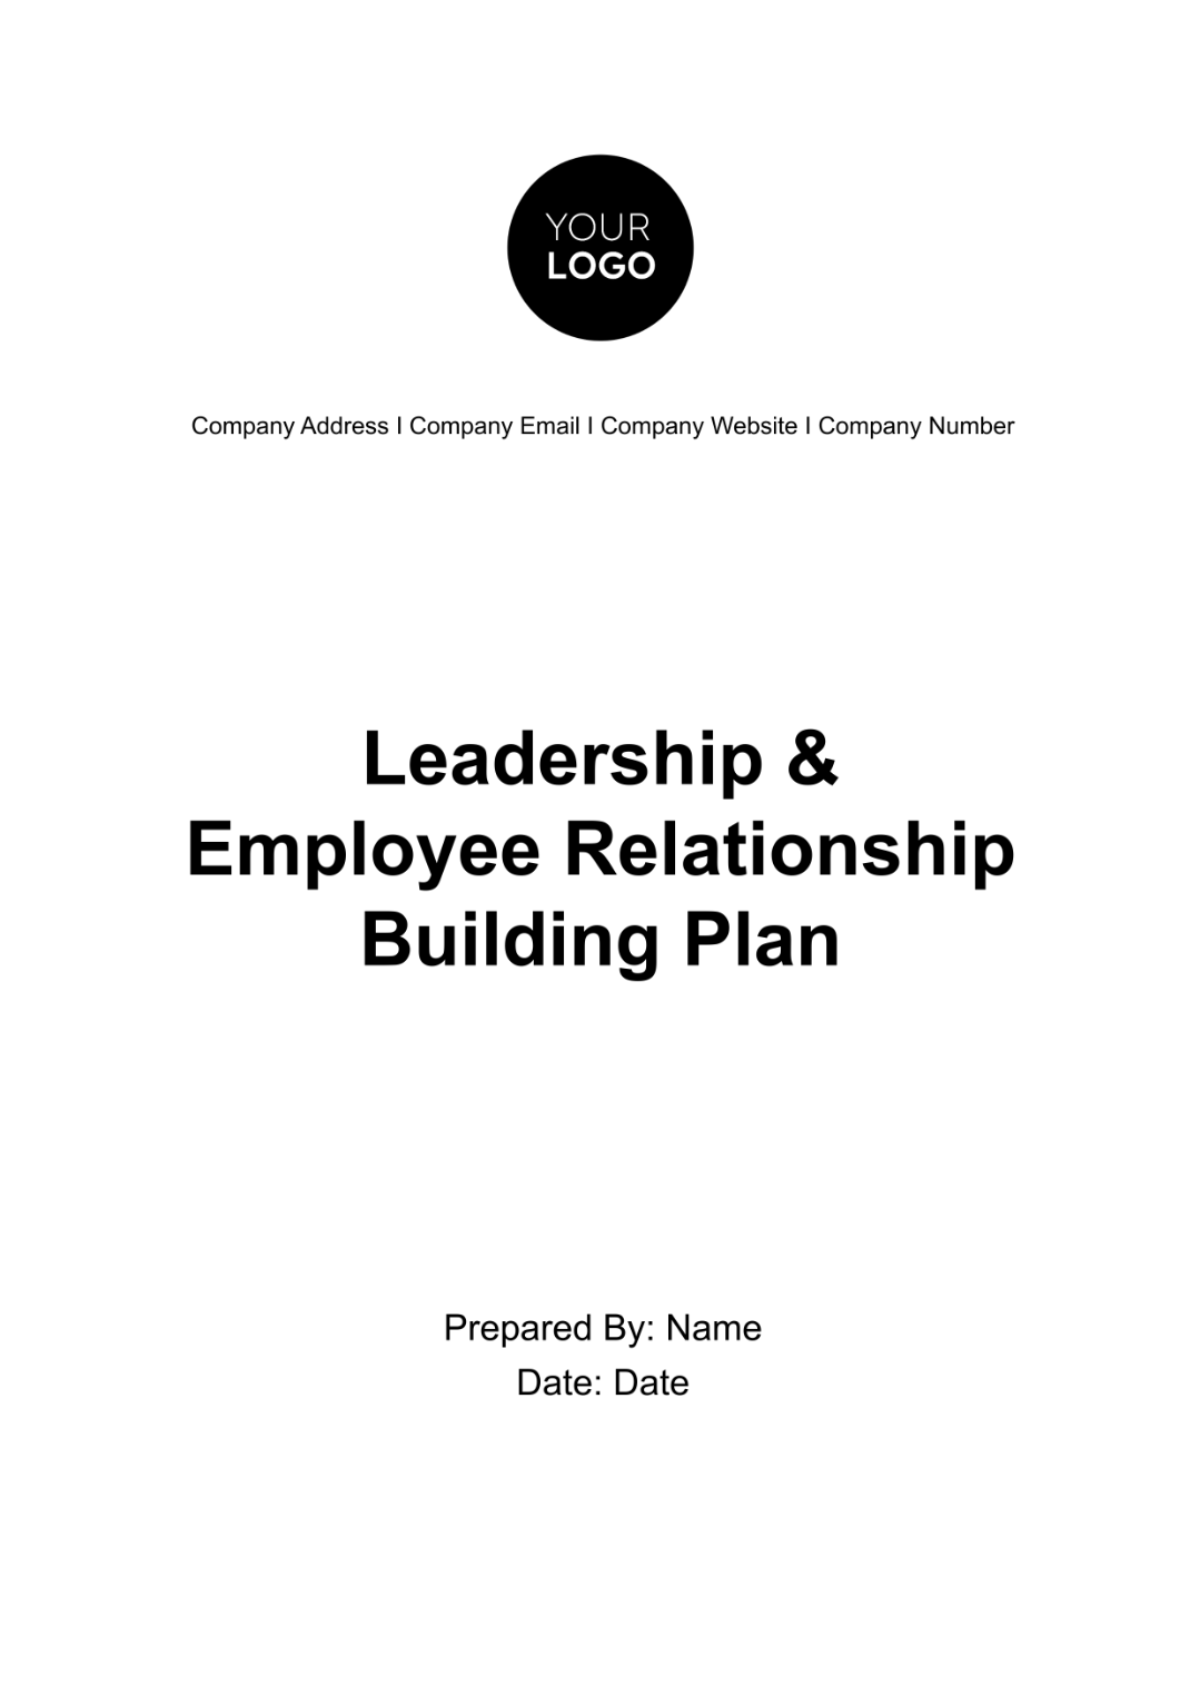 Free Leadership & Employee Relationship Building Plan HR Template